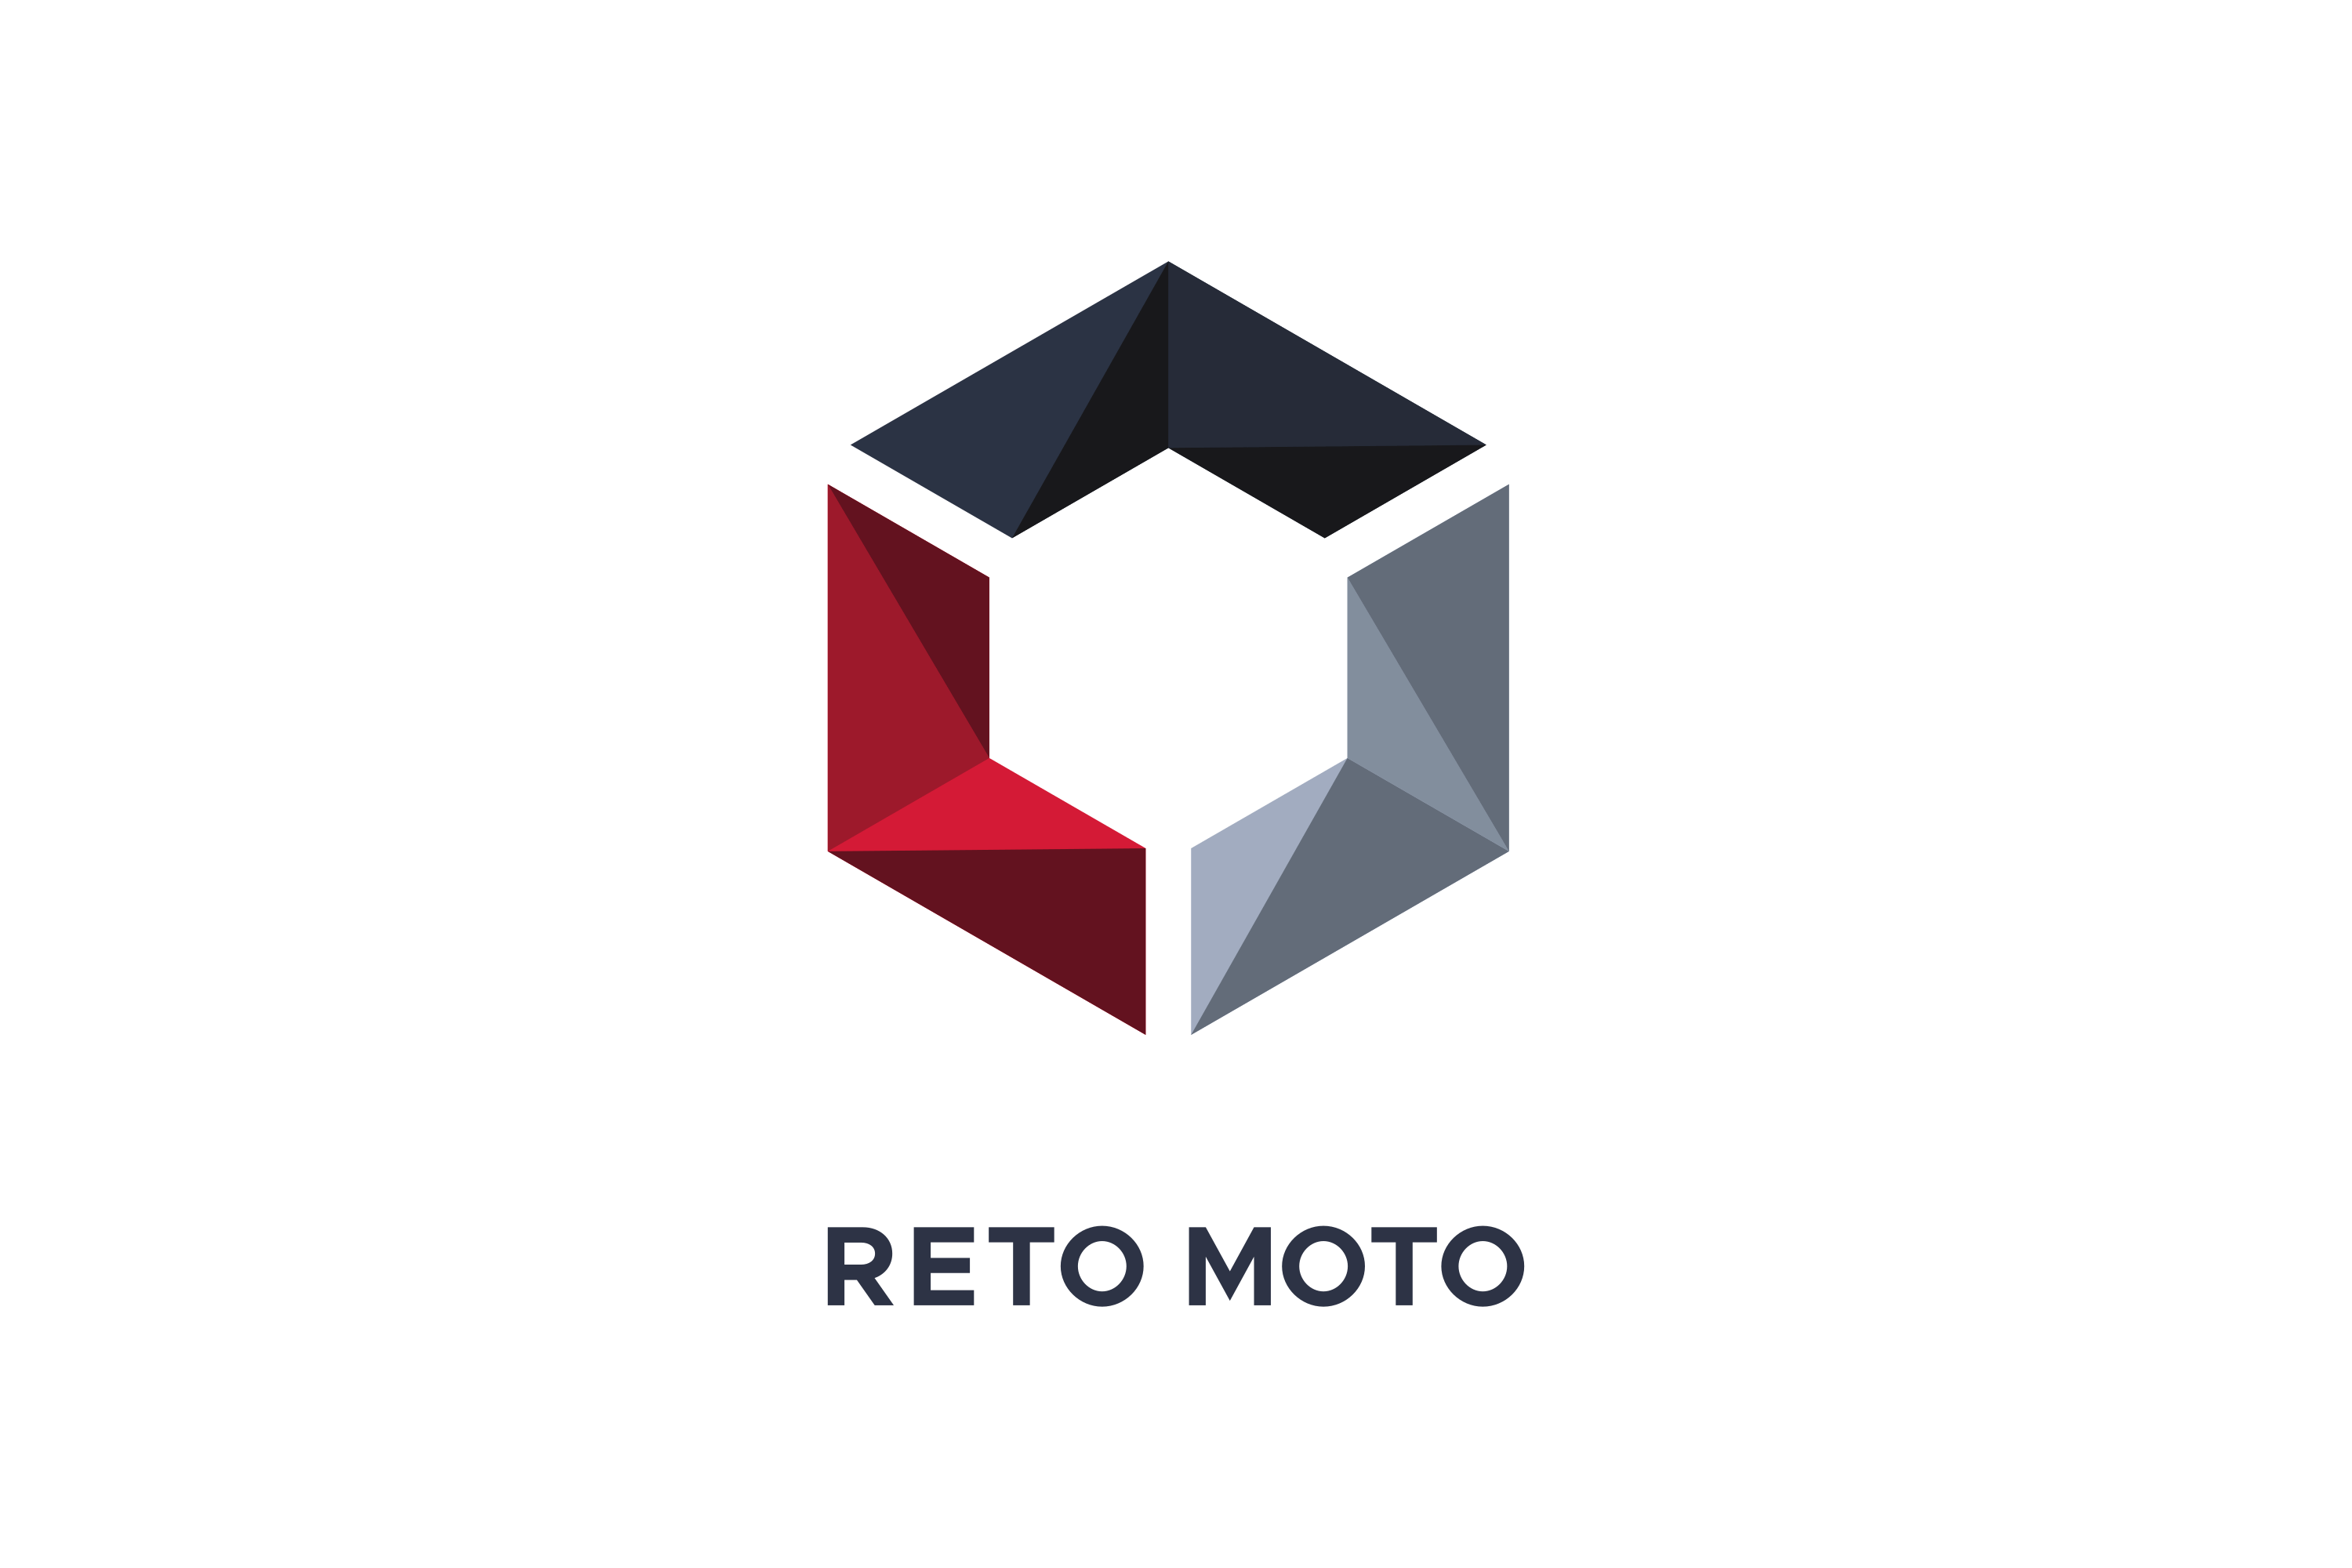 Moto Guzzi Vector Logo Free Download | TOPpng